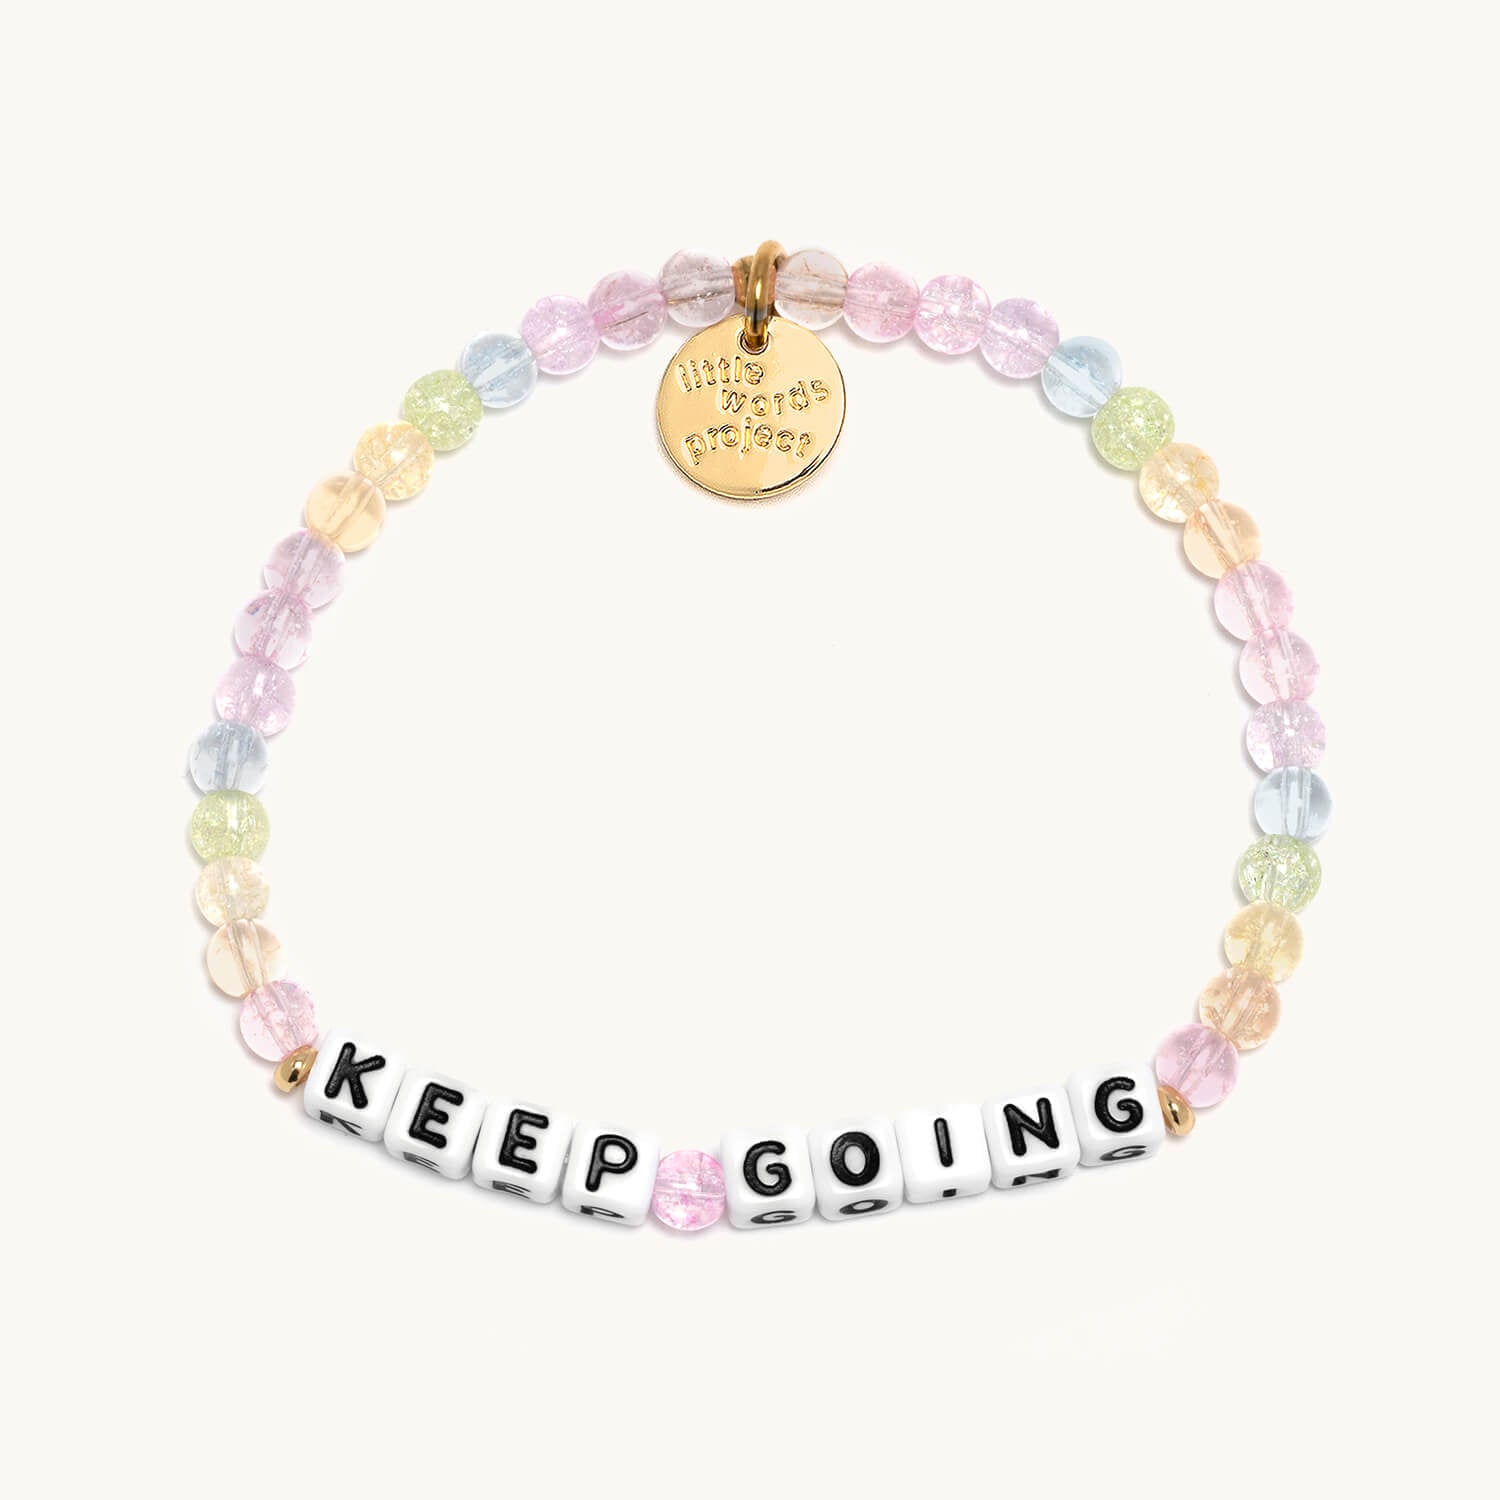 Keep Going- Little Words Project Bracelet